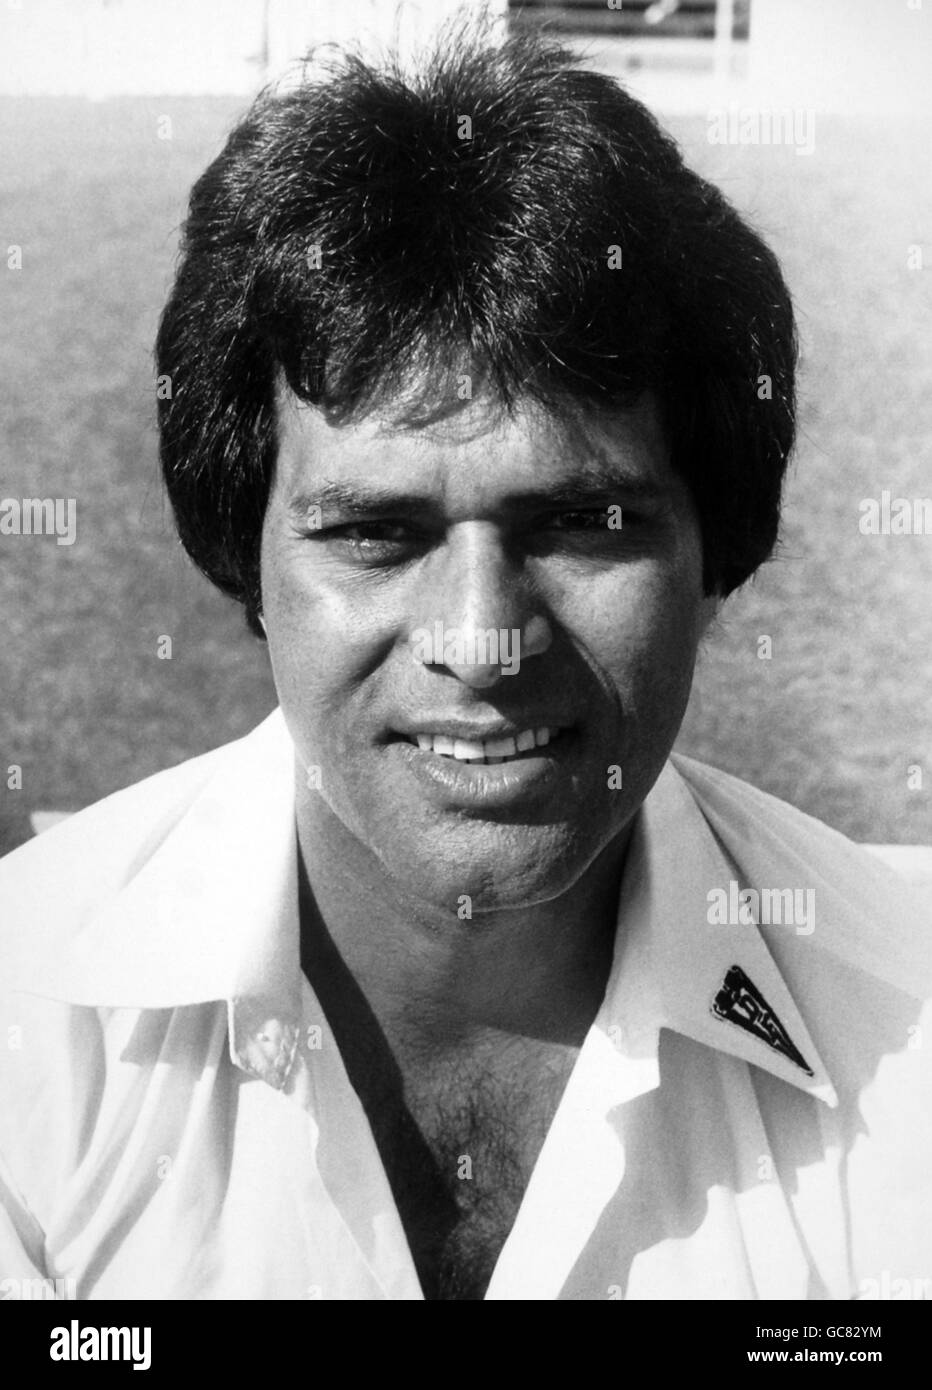 Cricket-Porträts. Der pakistanische Cricketspieler Younis Ahmed Stockfoto